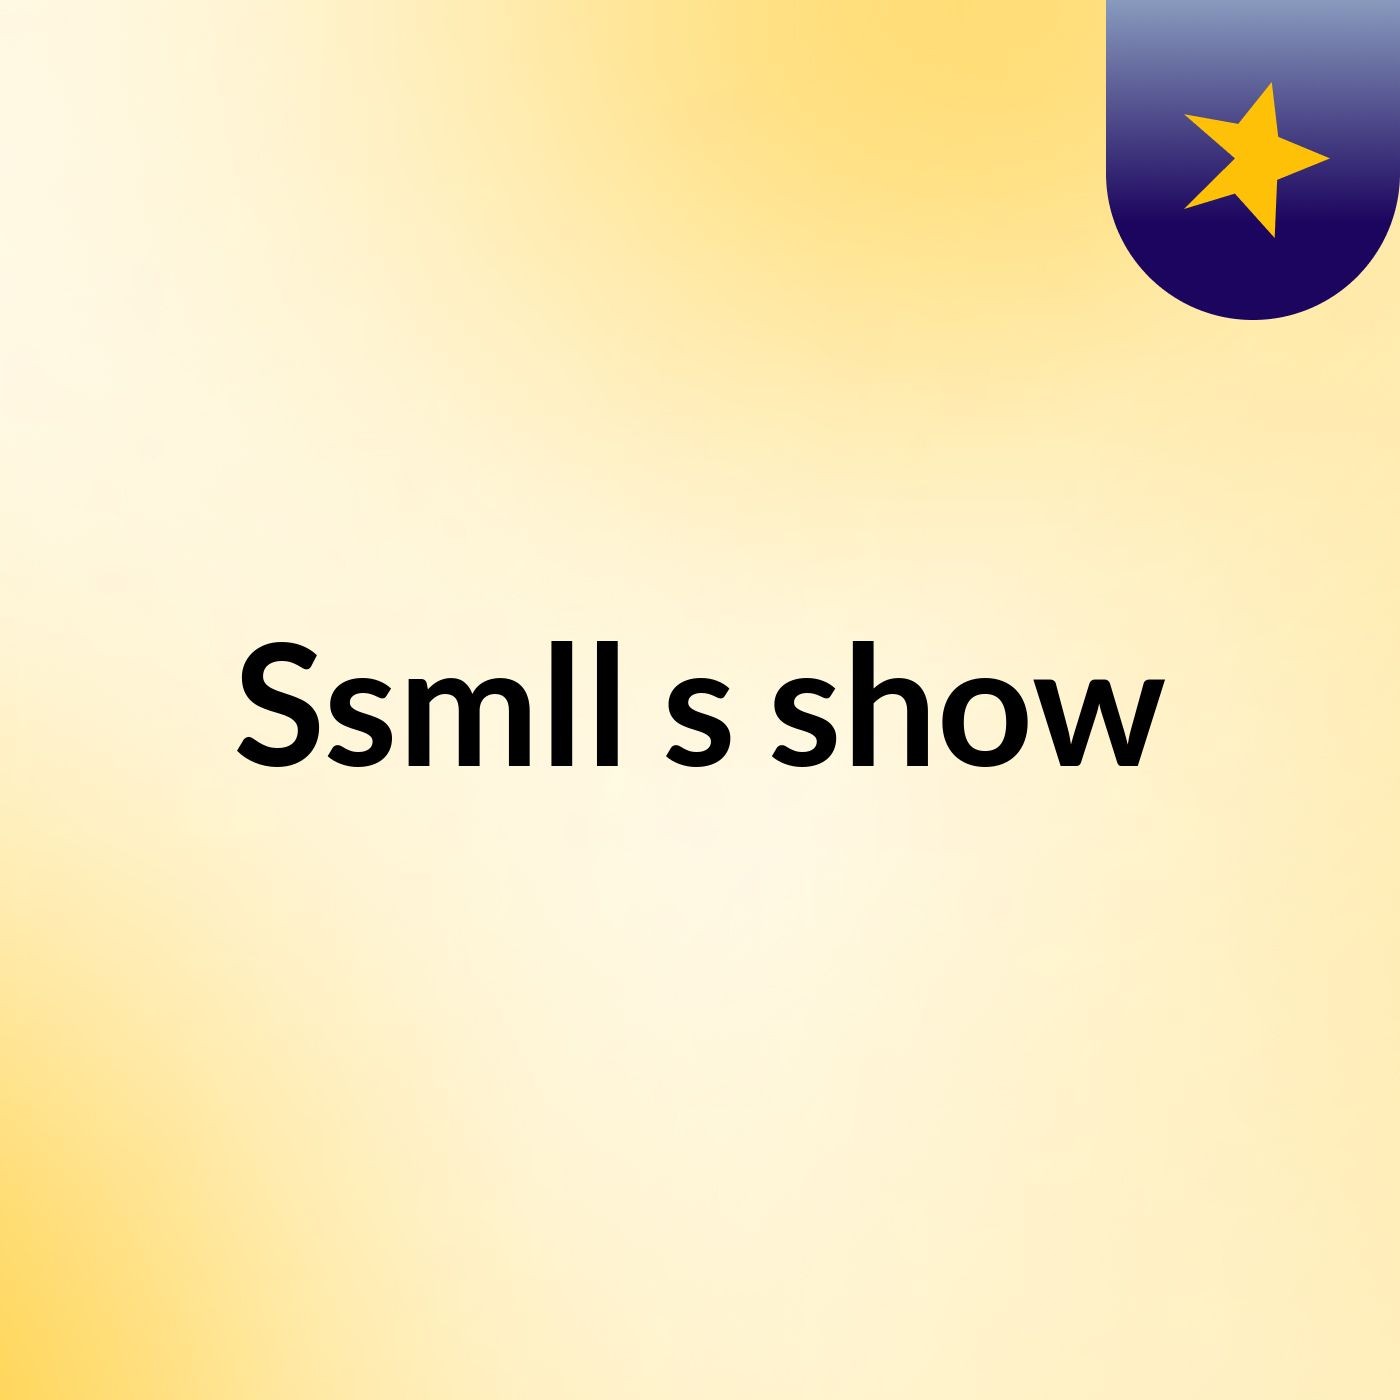 Ssmll's show